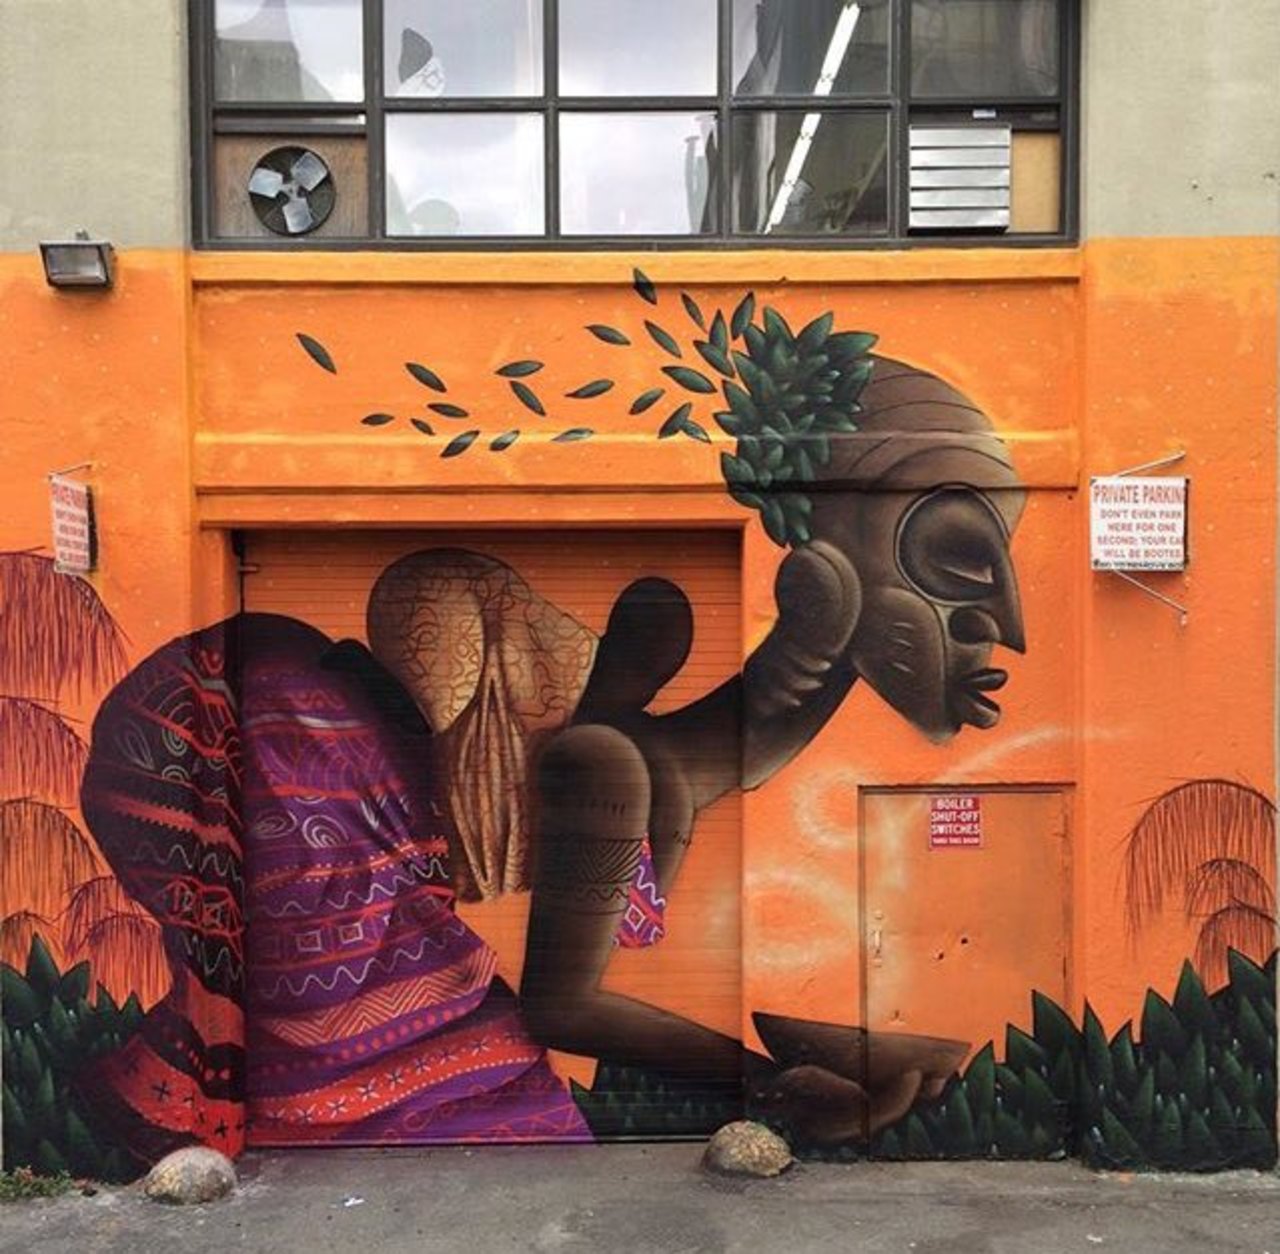 New Street Art by Alexandre Keto in NYC 

#art #graffiti #mural #streetart https://t.co/qMb7ZIaHcv